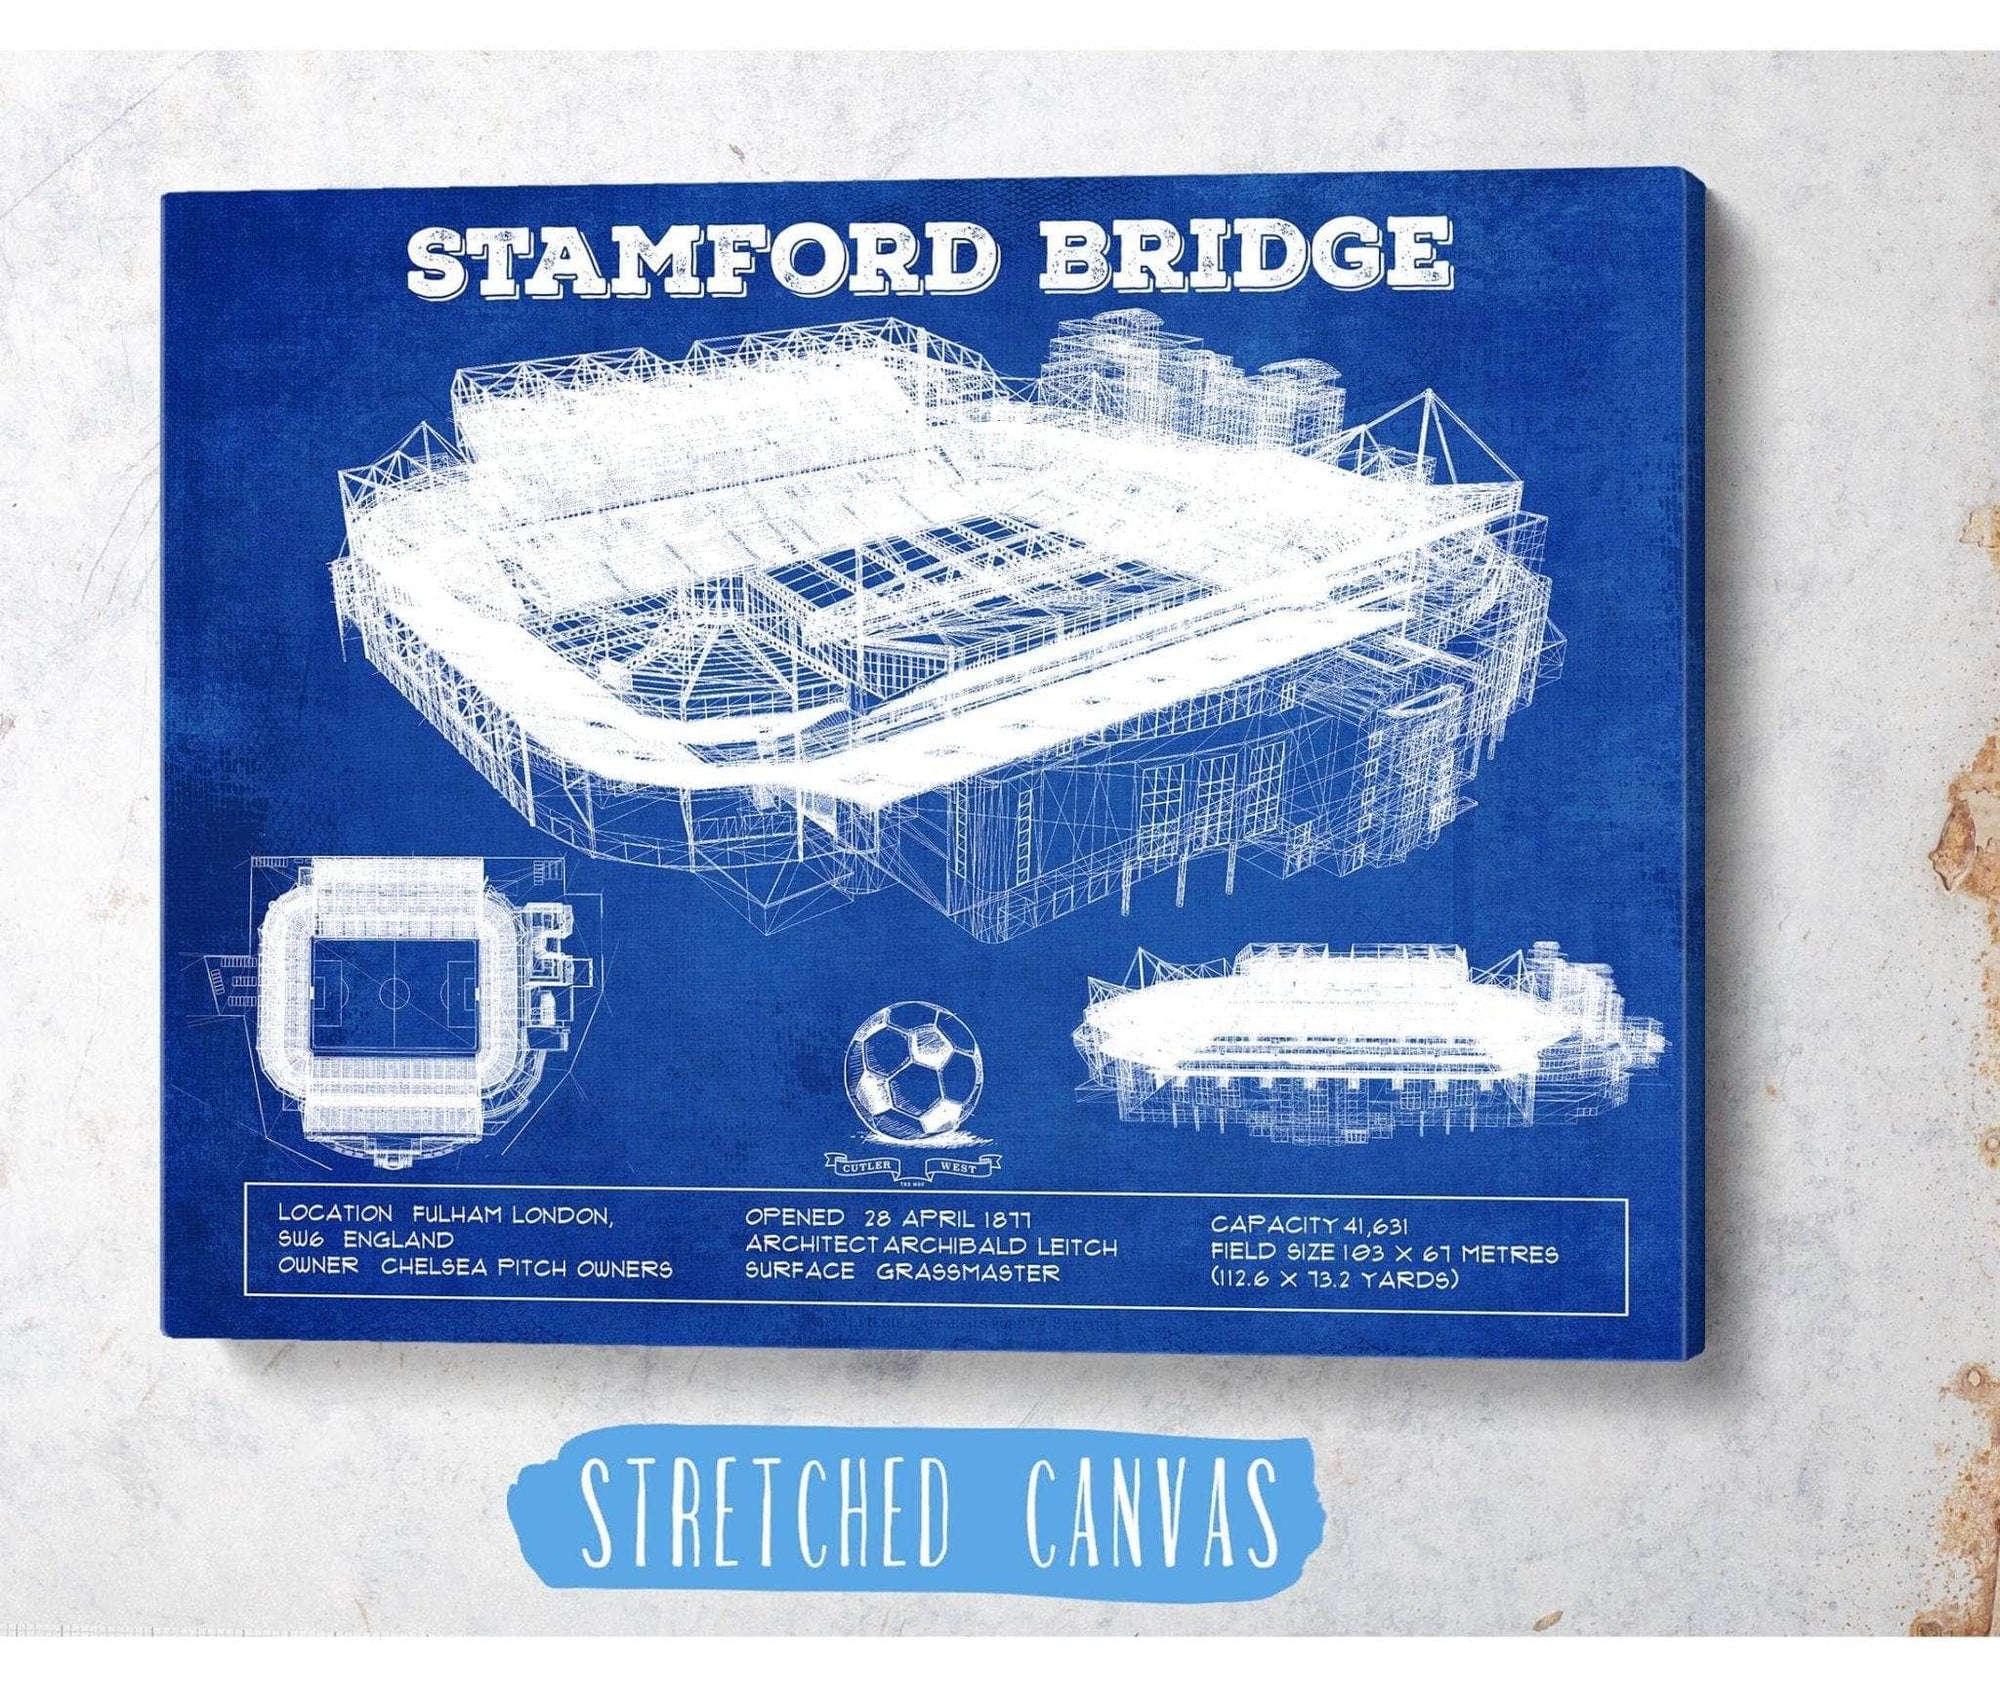 Cutler West Soccer Collection Stamford Bridge - Chelsea FC European Football Soccer Stadium Print